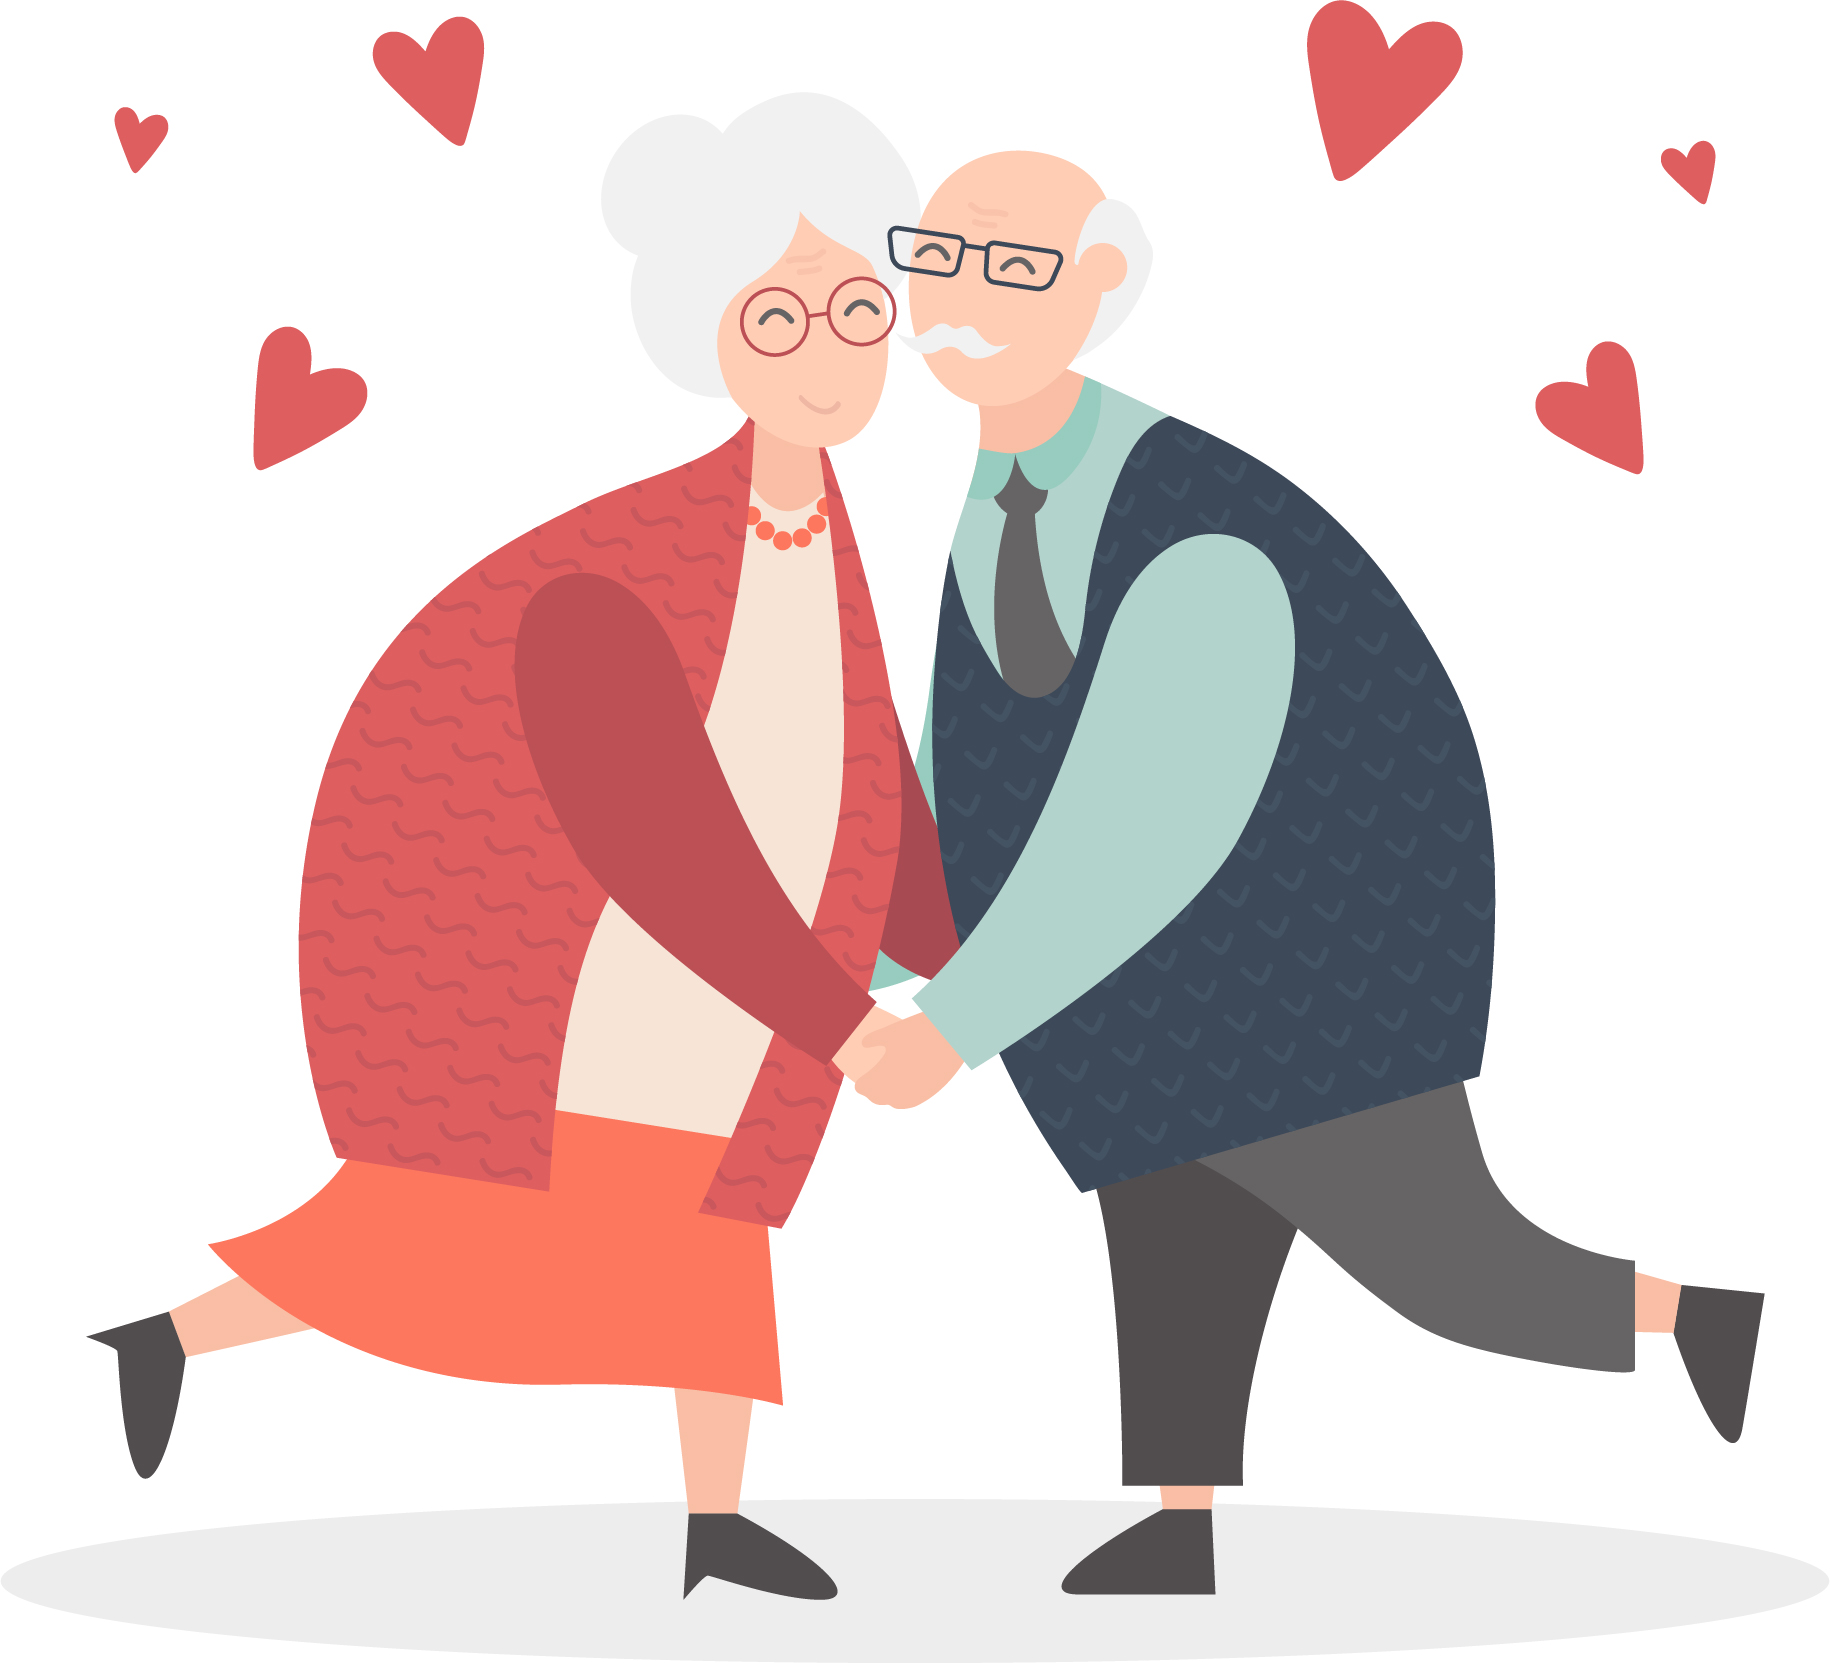 Grandma and grandpa making love